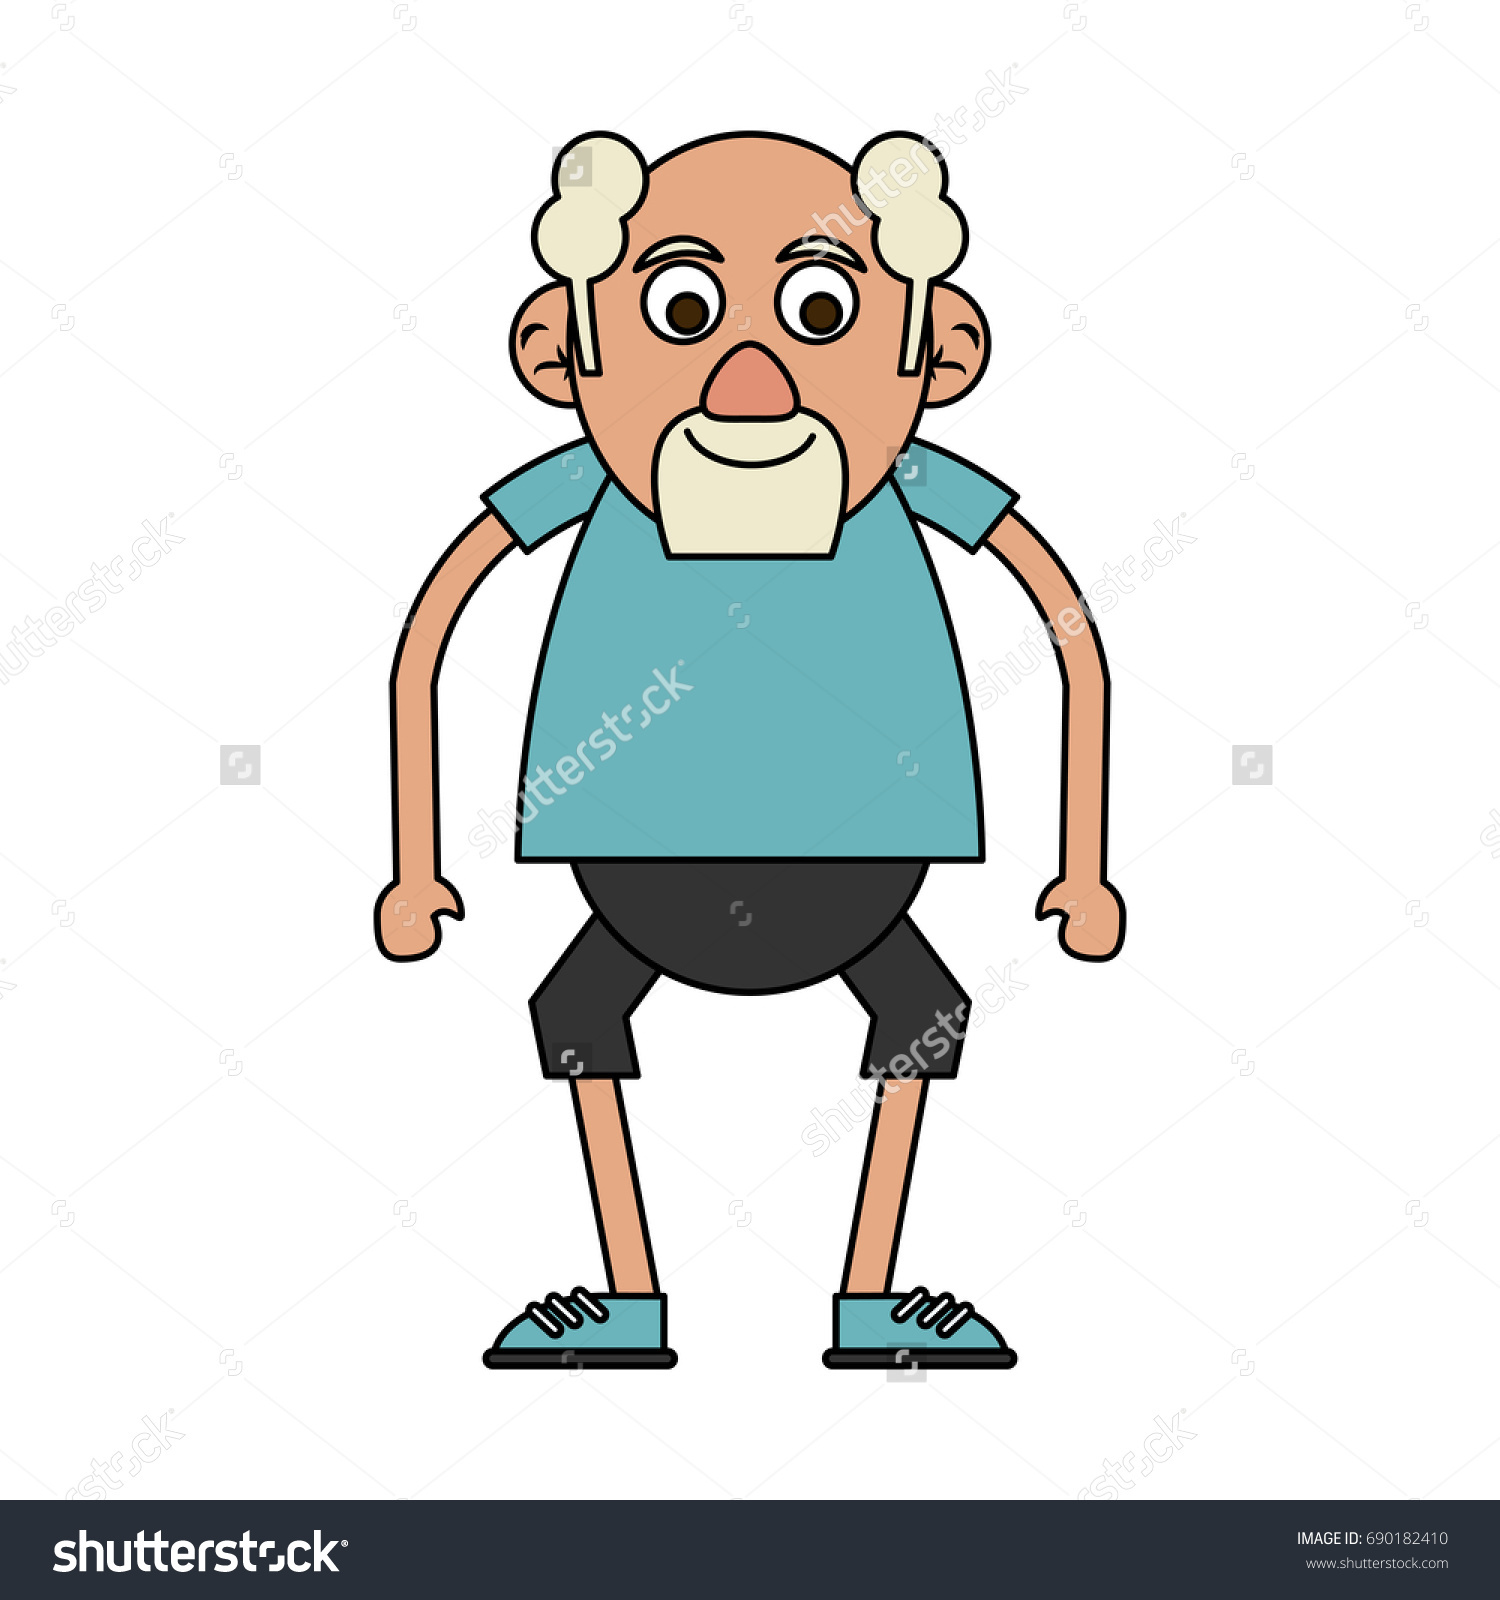 cute elderly person icon image  #690182410